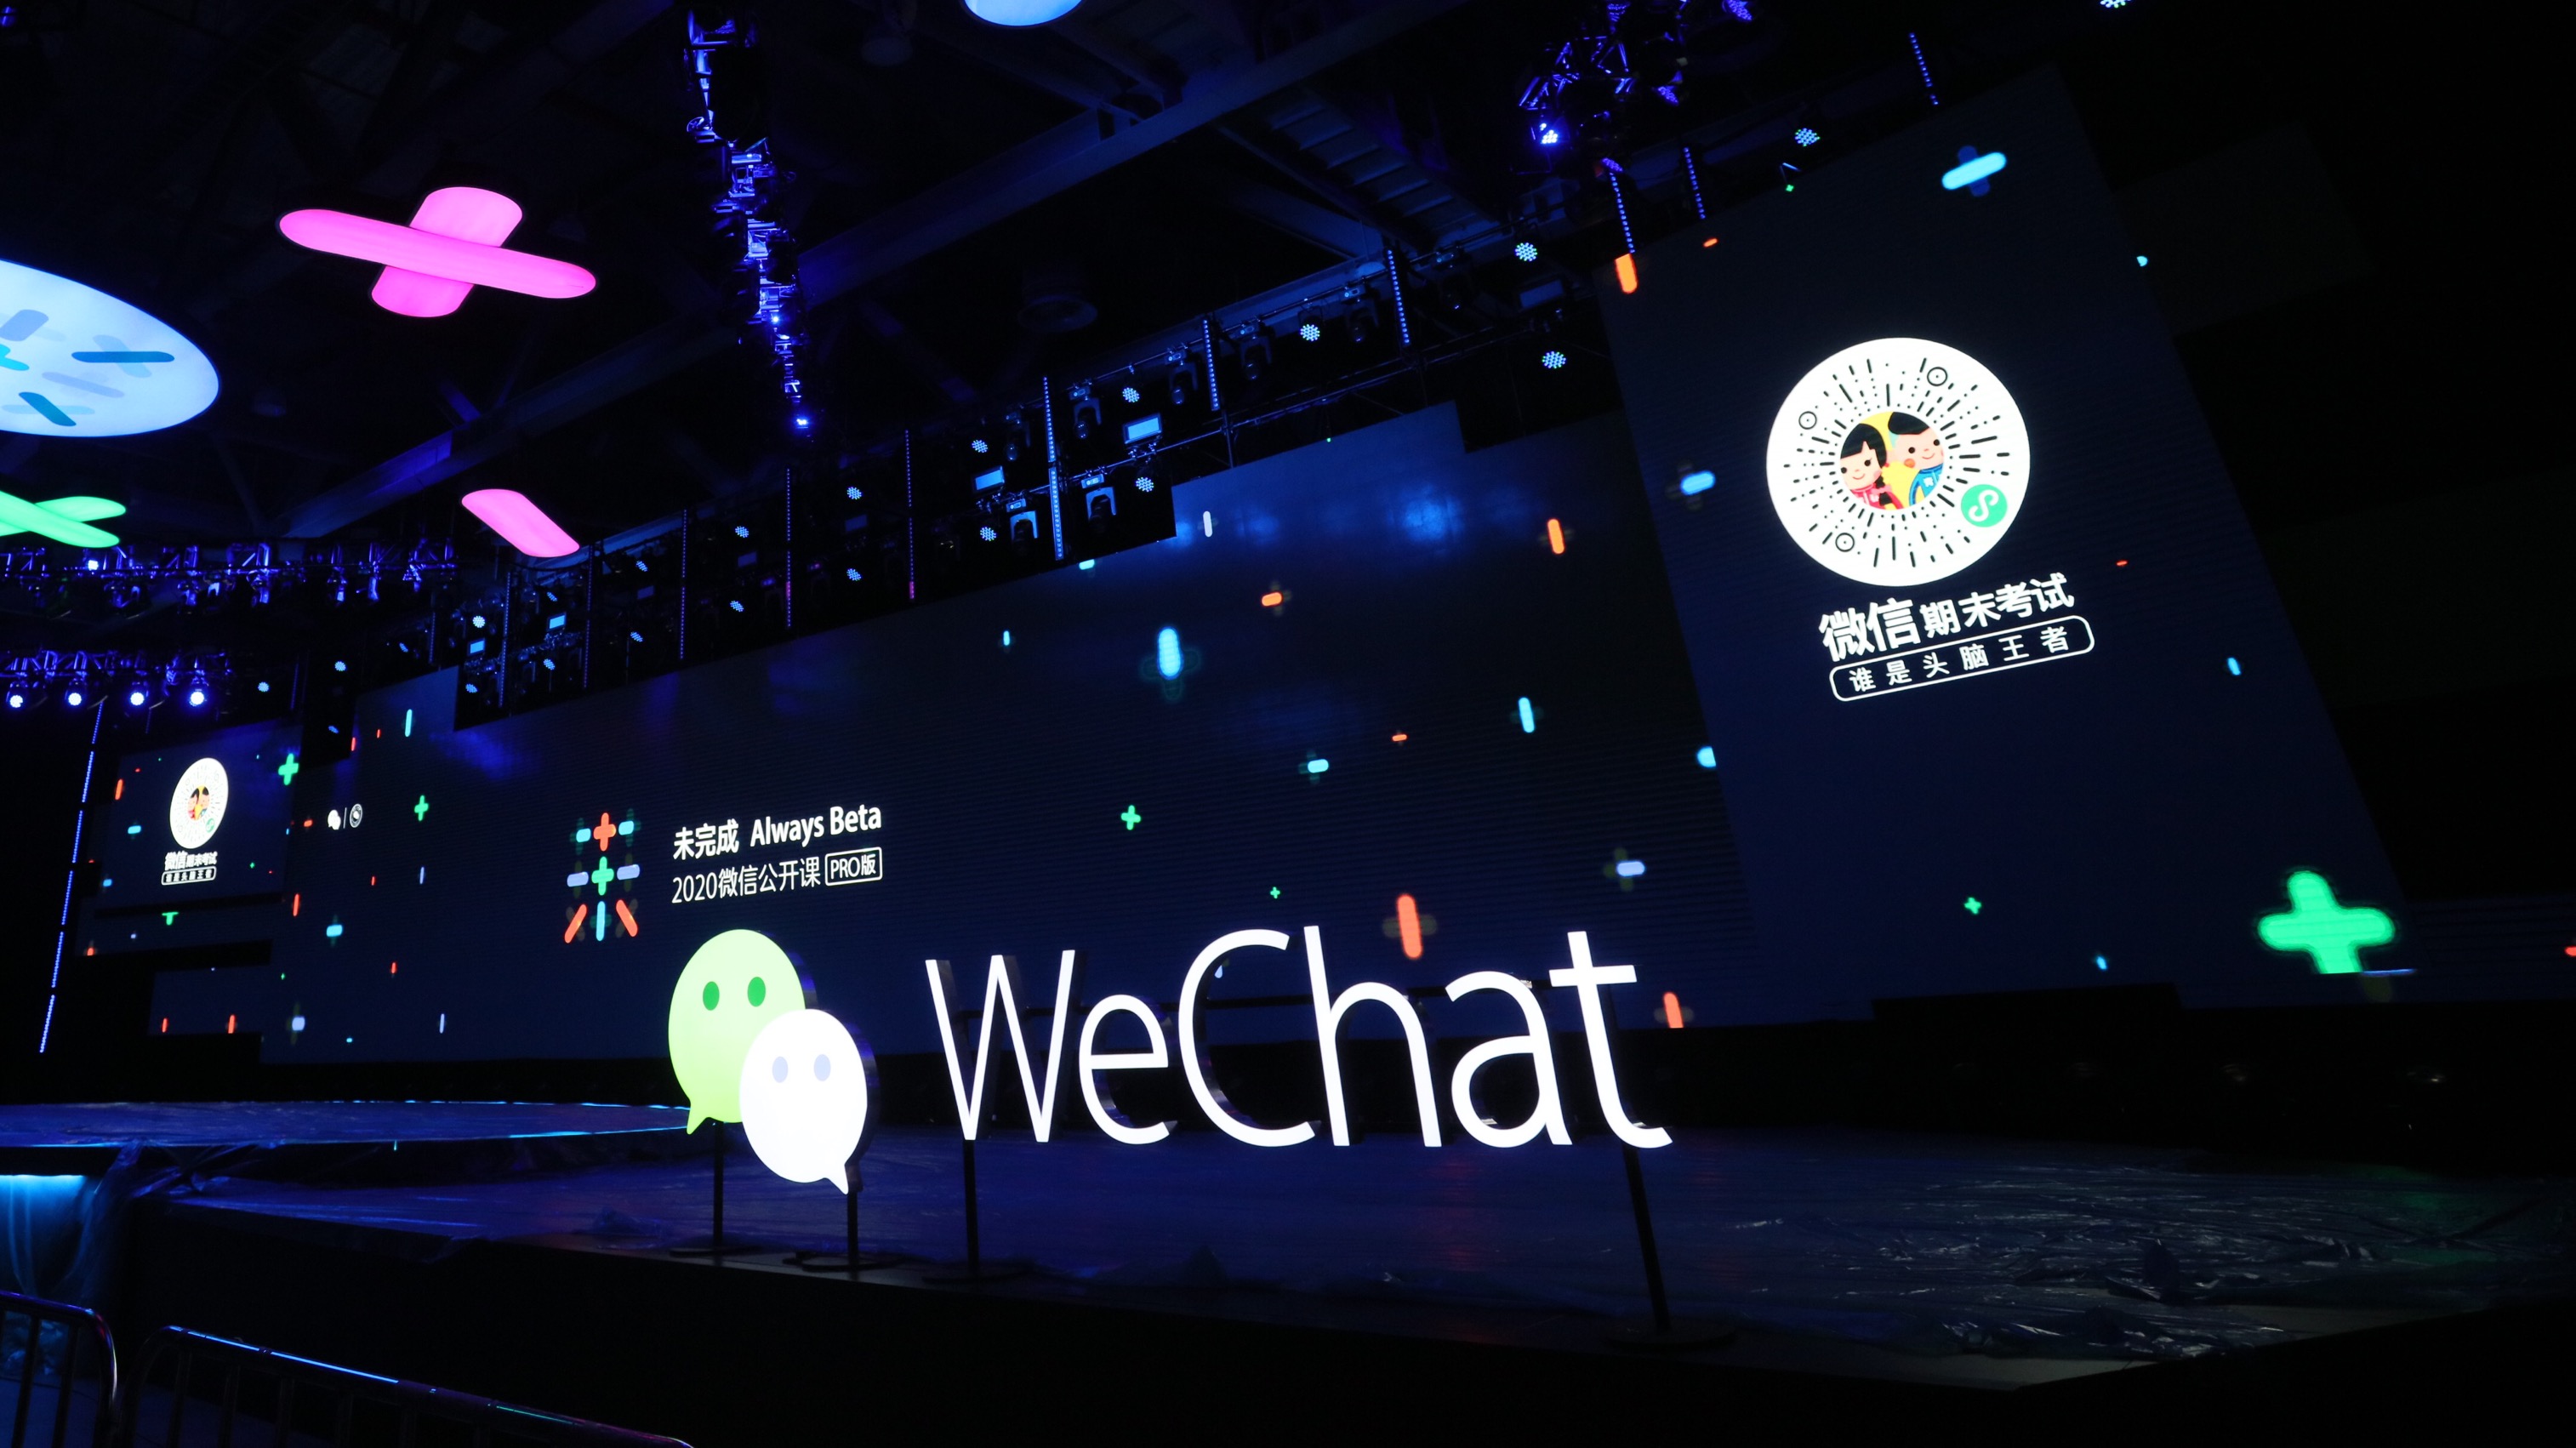 WeChat to enhance short-form content on its platform, says creator Allen Zhang